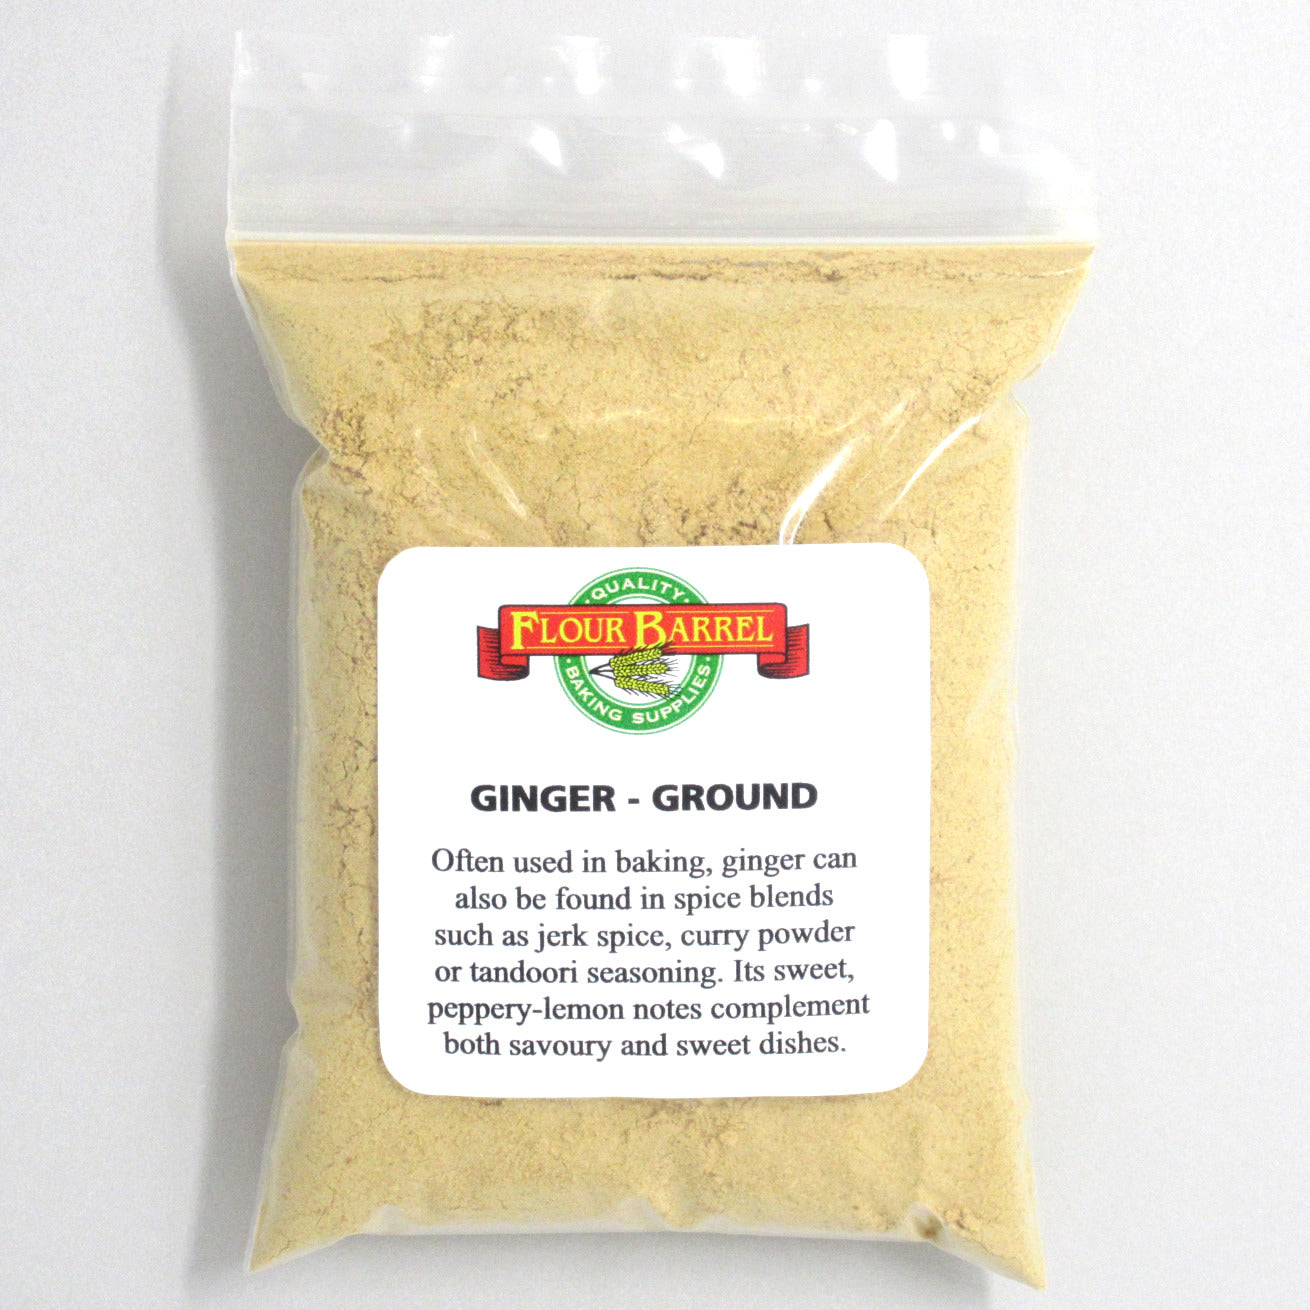 Flour Barrel product image - Ginger - Ground